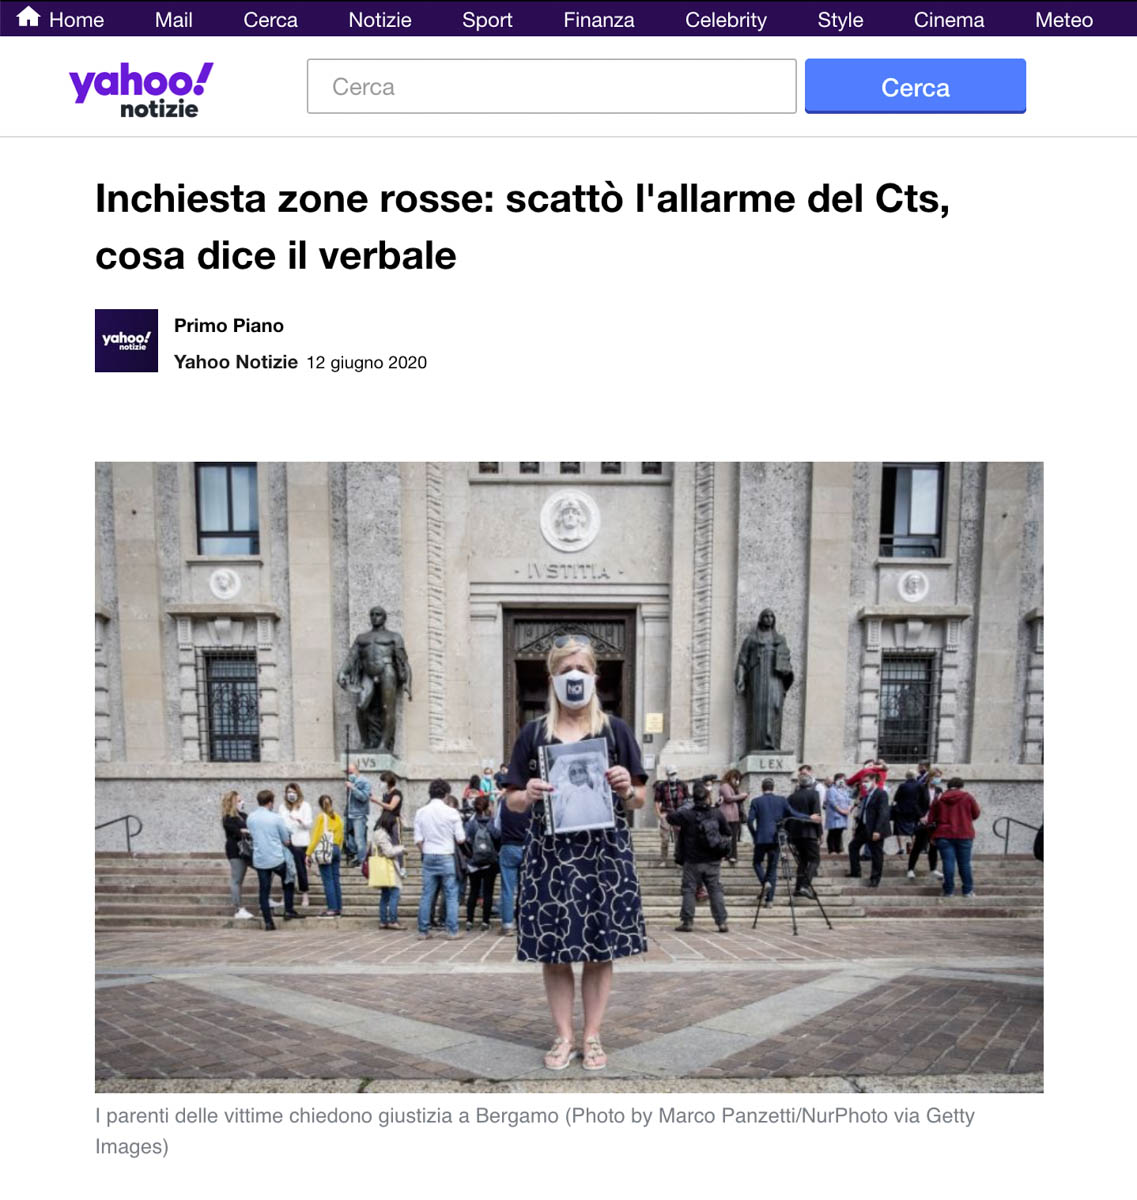 Publication on Yahoo News